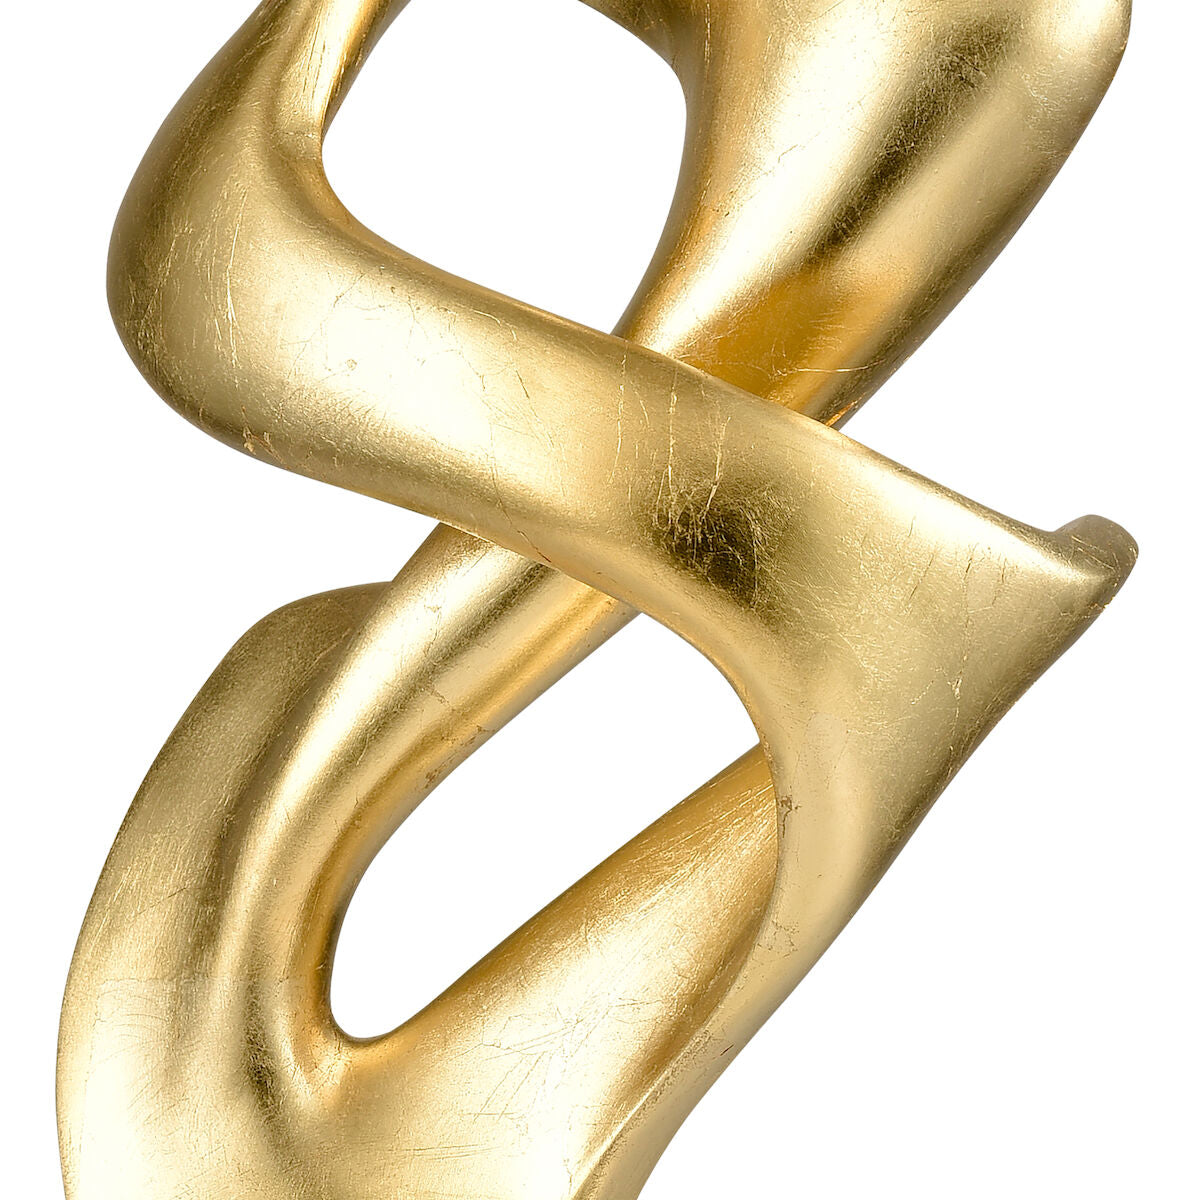 Gold Twin Swirls Sculpture